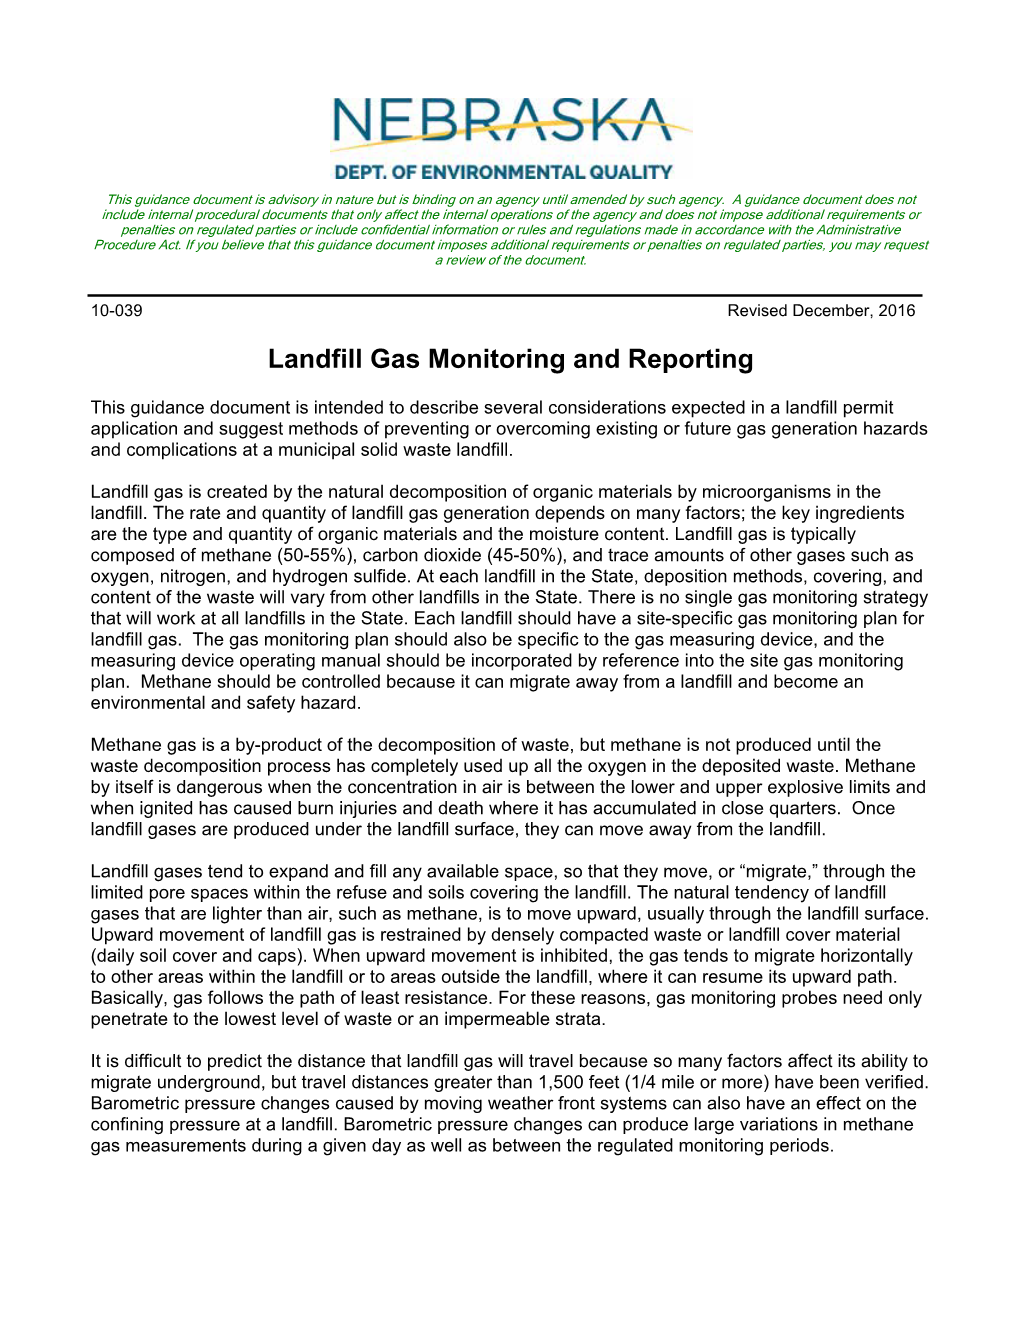 Landfill Gas Monitoring and Reporting